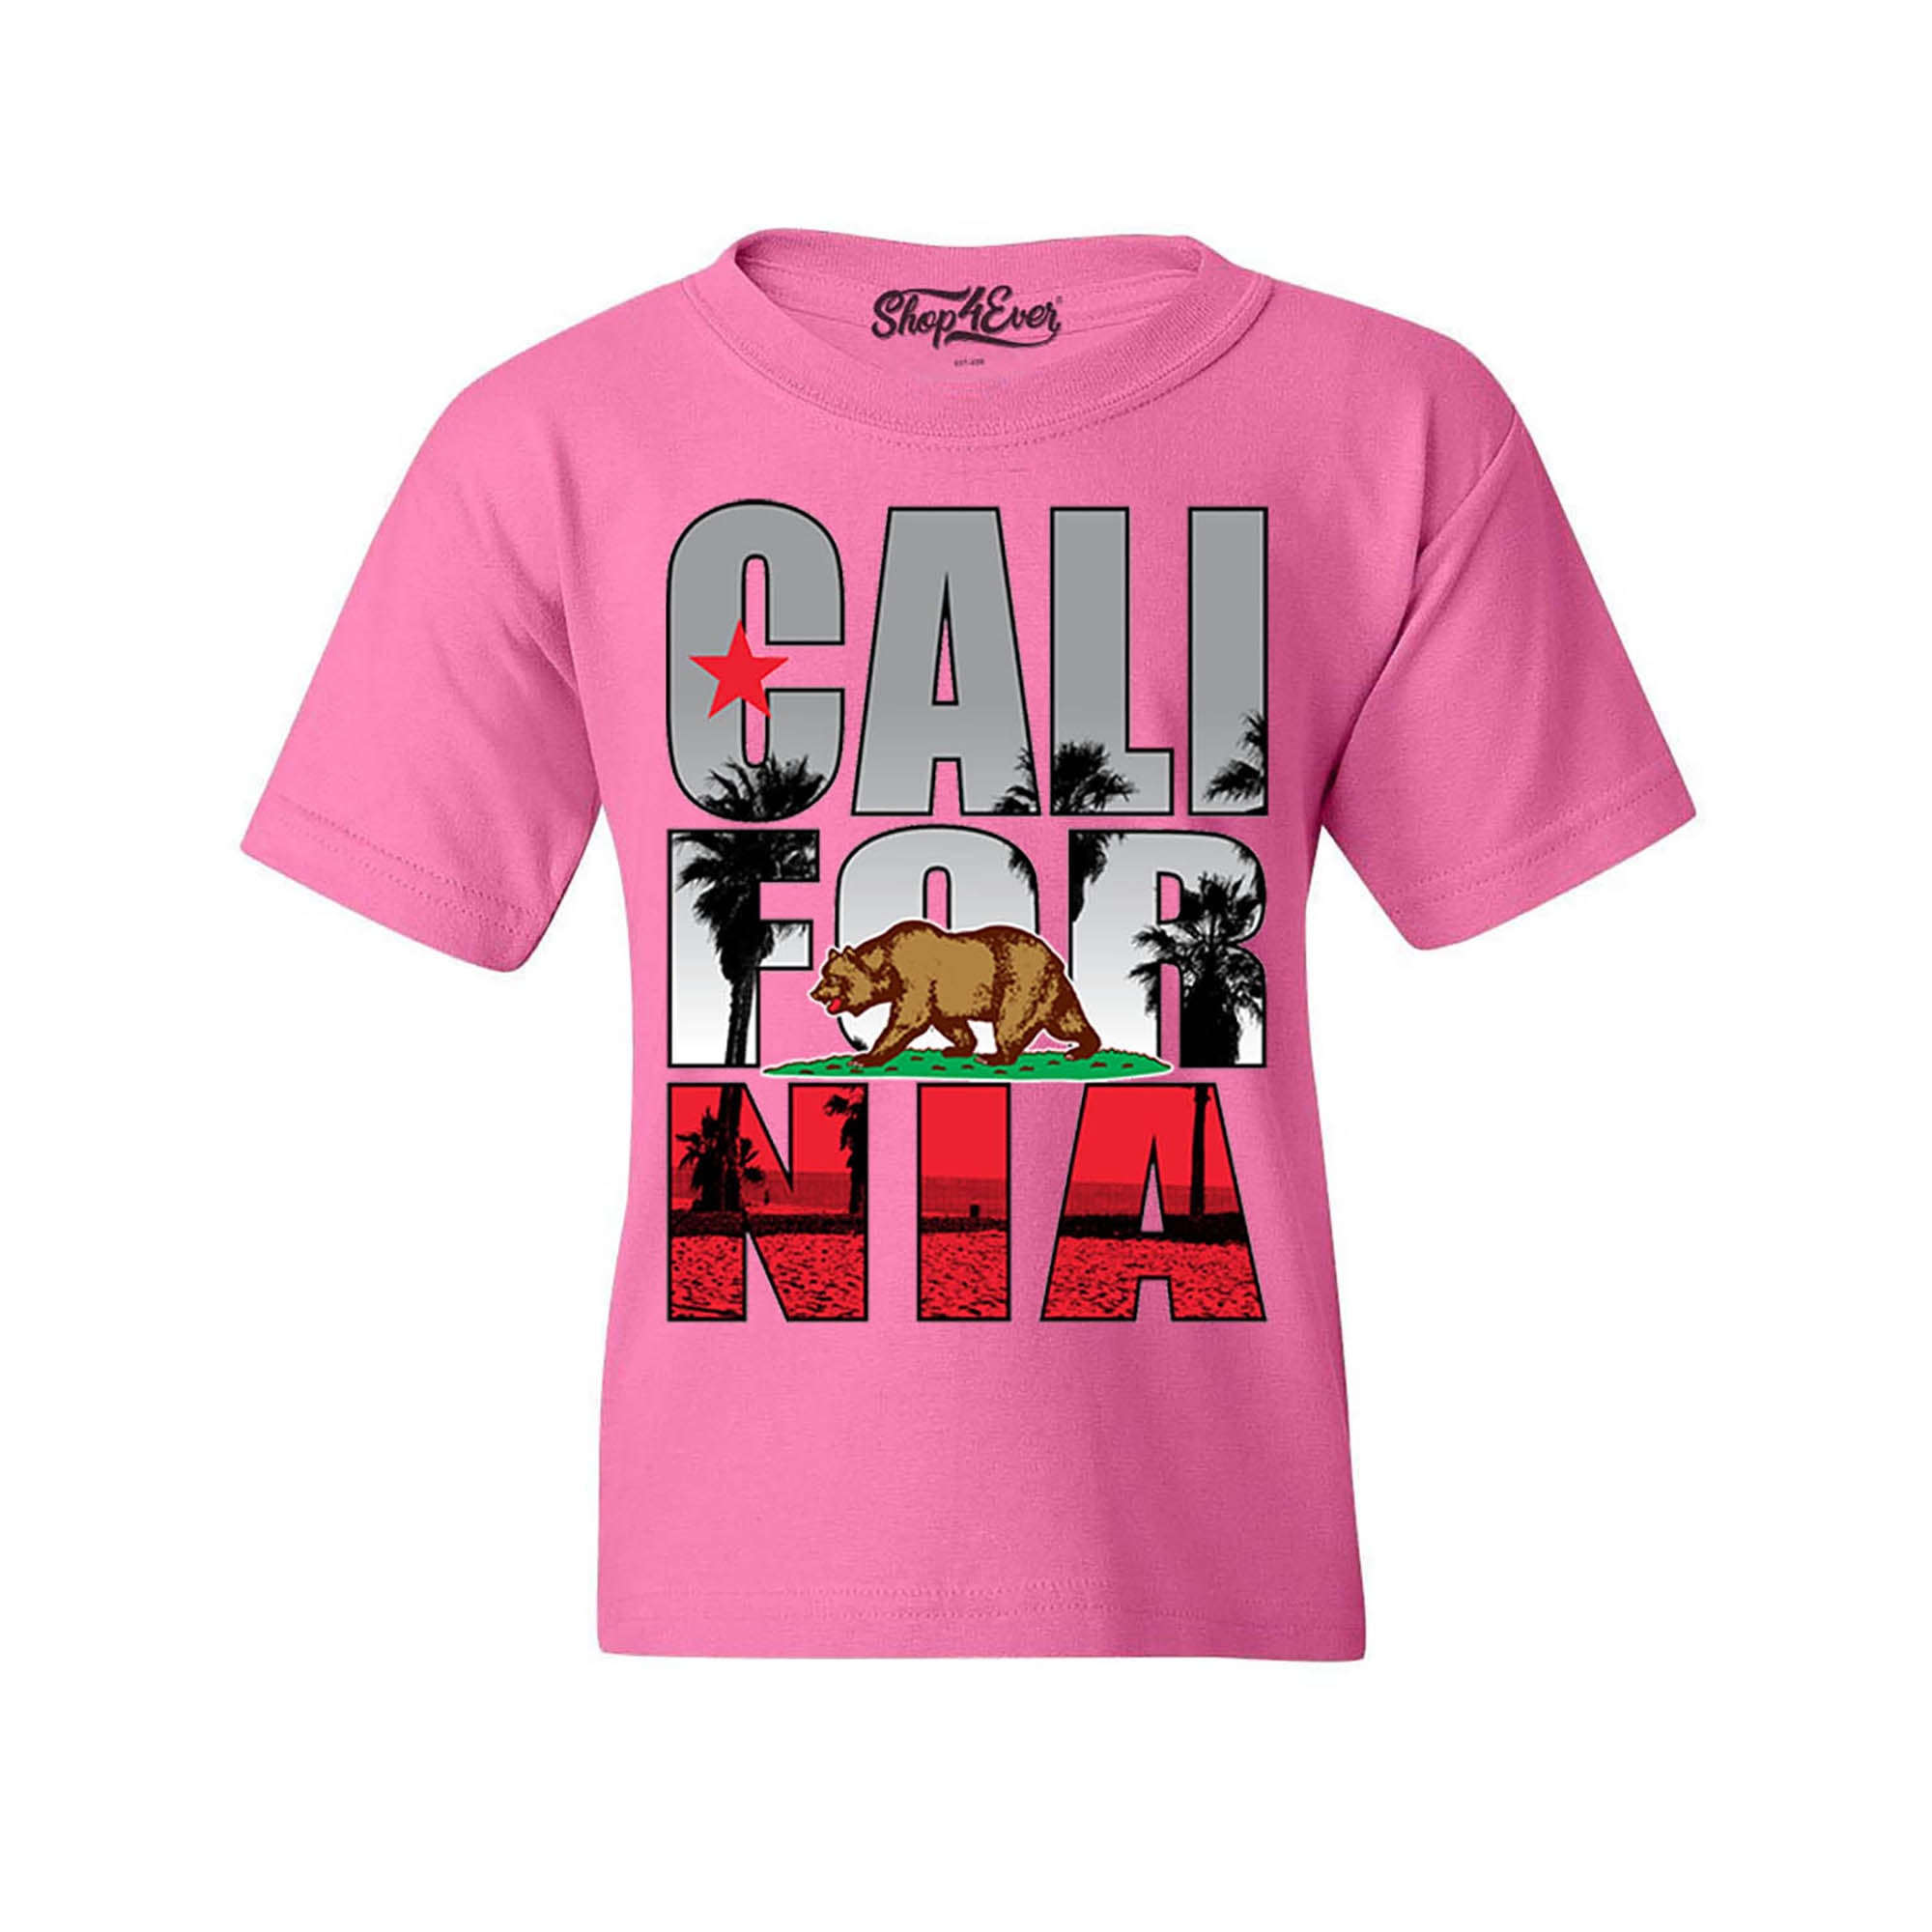 California Beach Palm Tree Youth's T-Shirt Child Kids Cali Flag Shirts